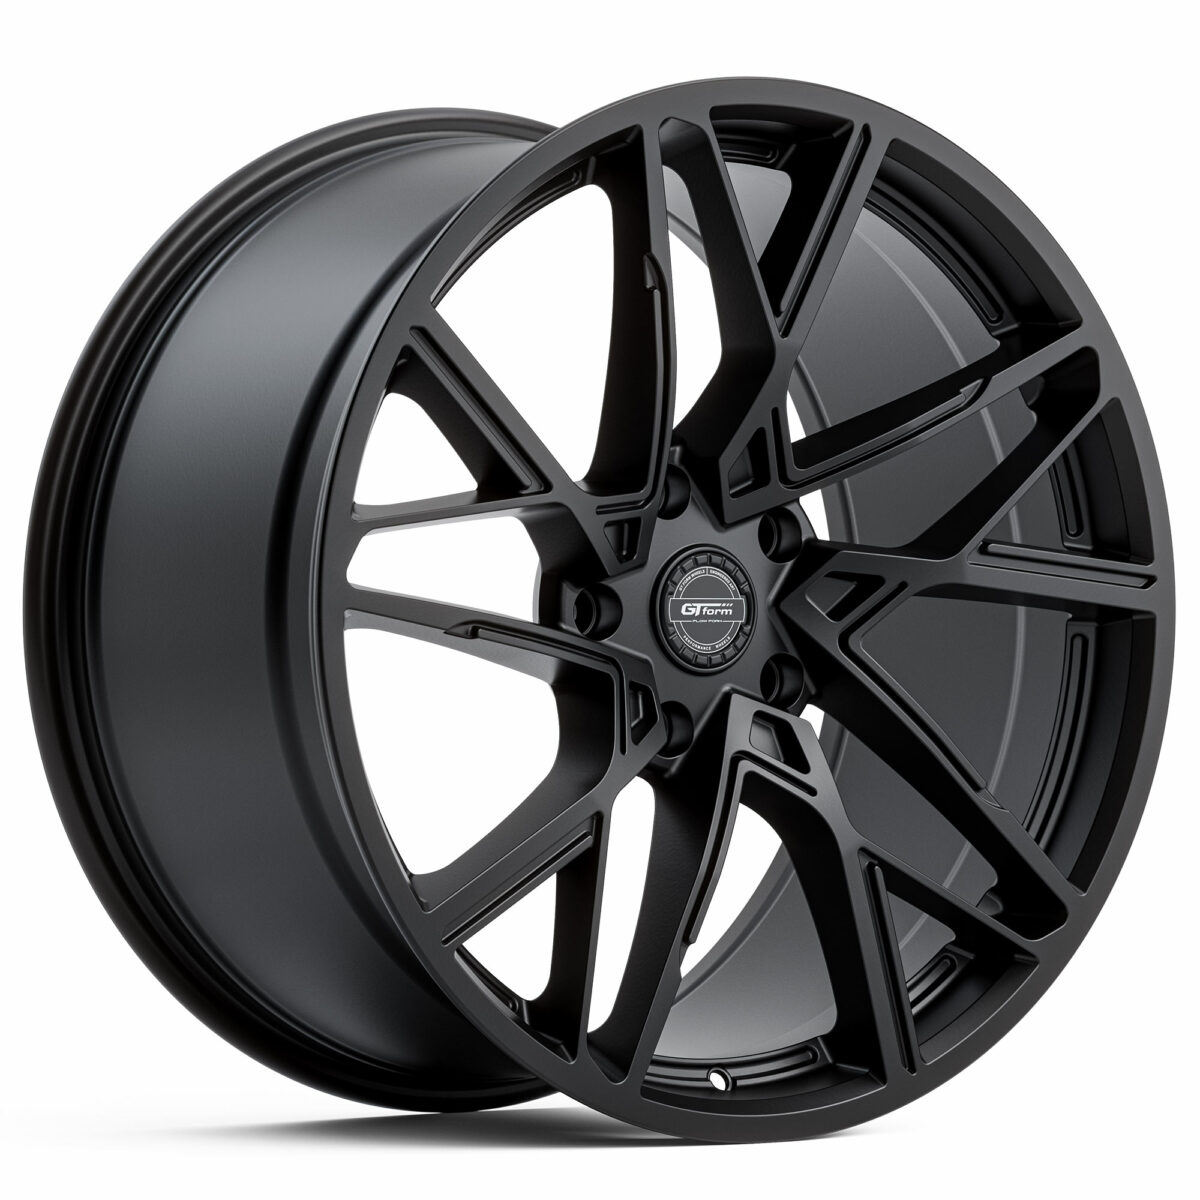 GT Form Interflow Satin Black Rims 19 20 inch Performance Wheels